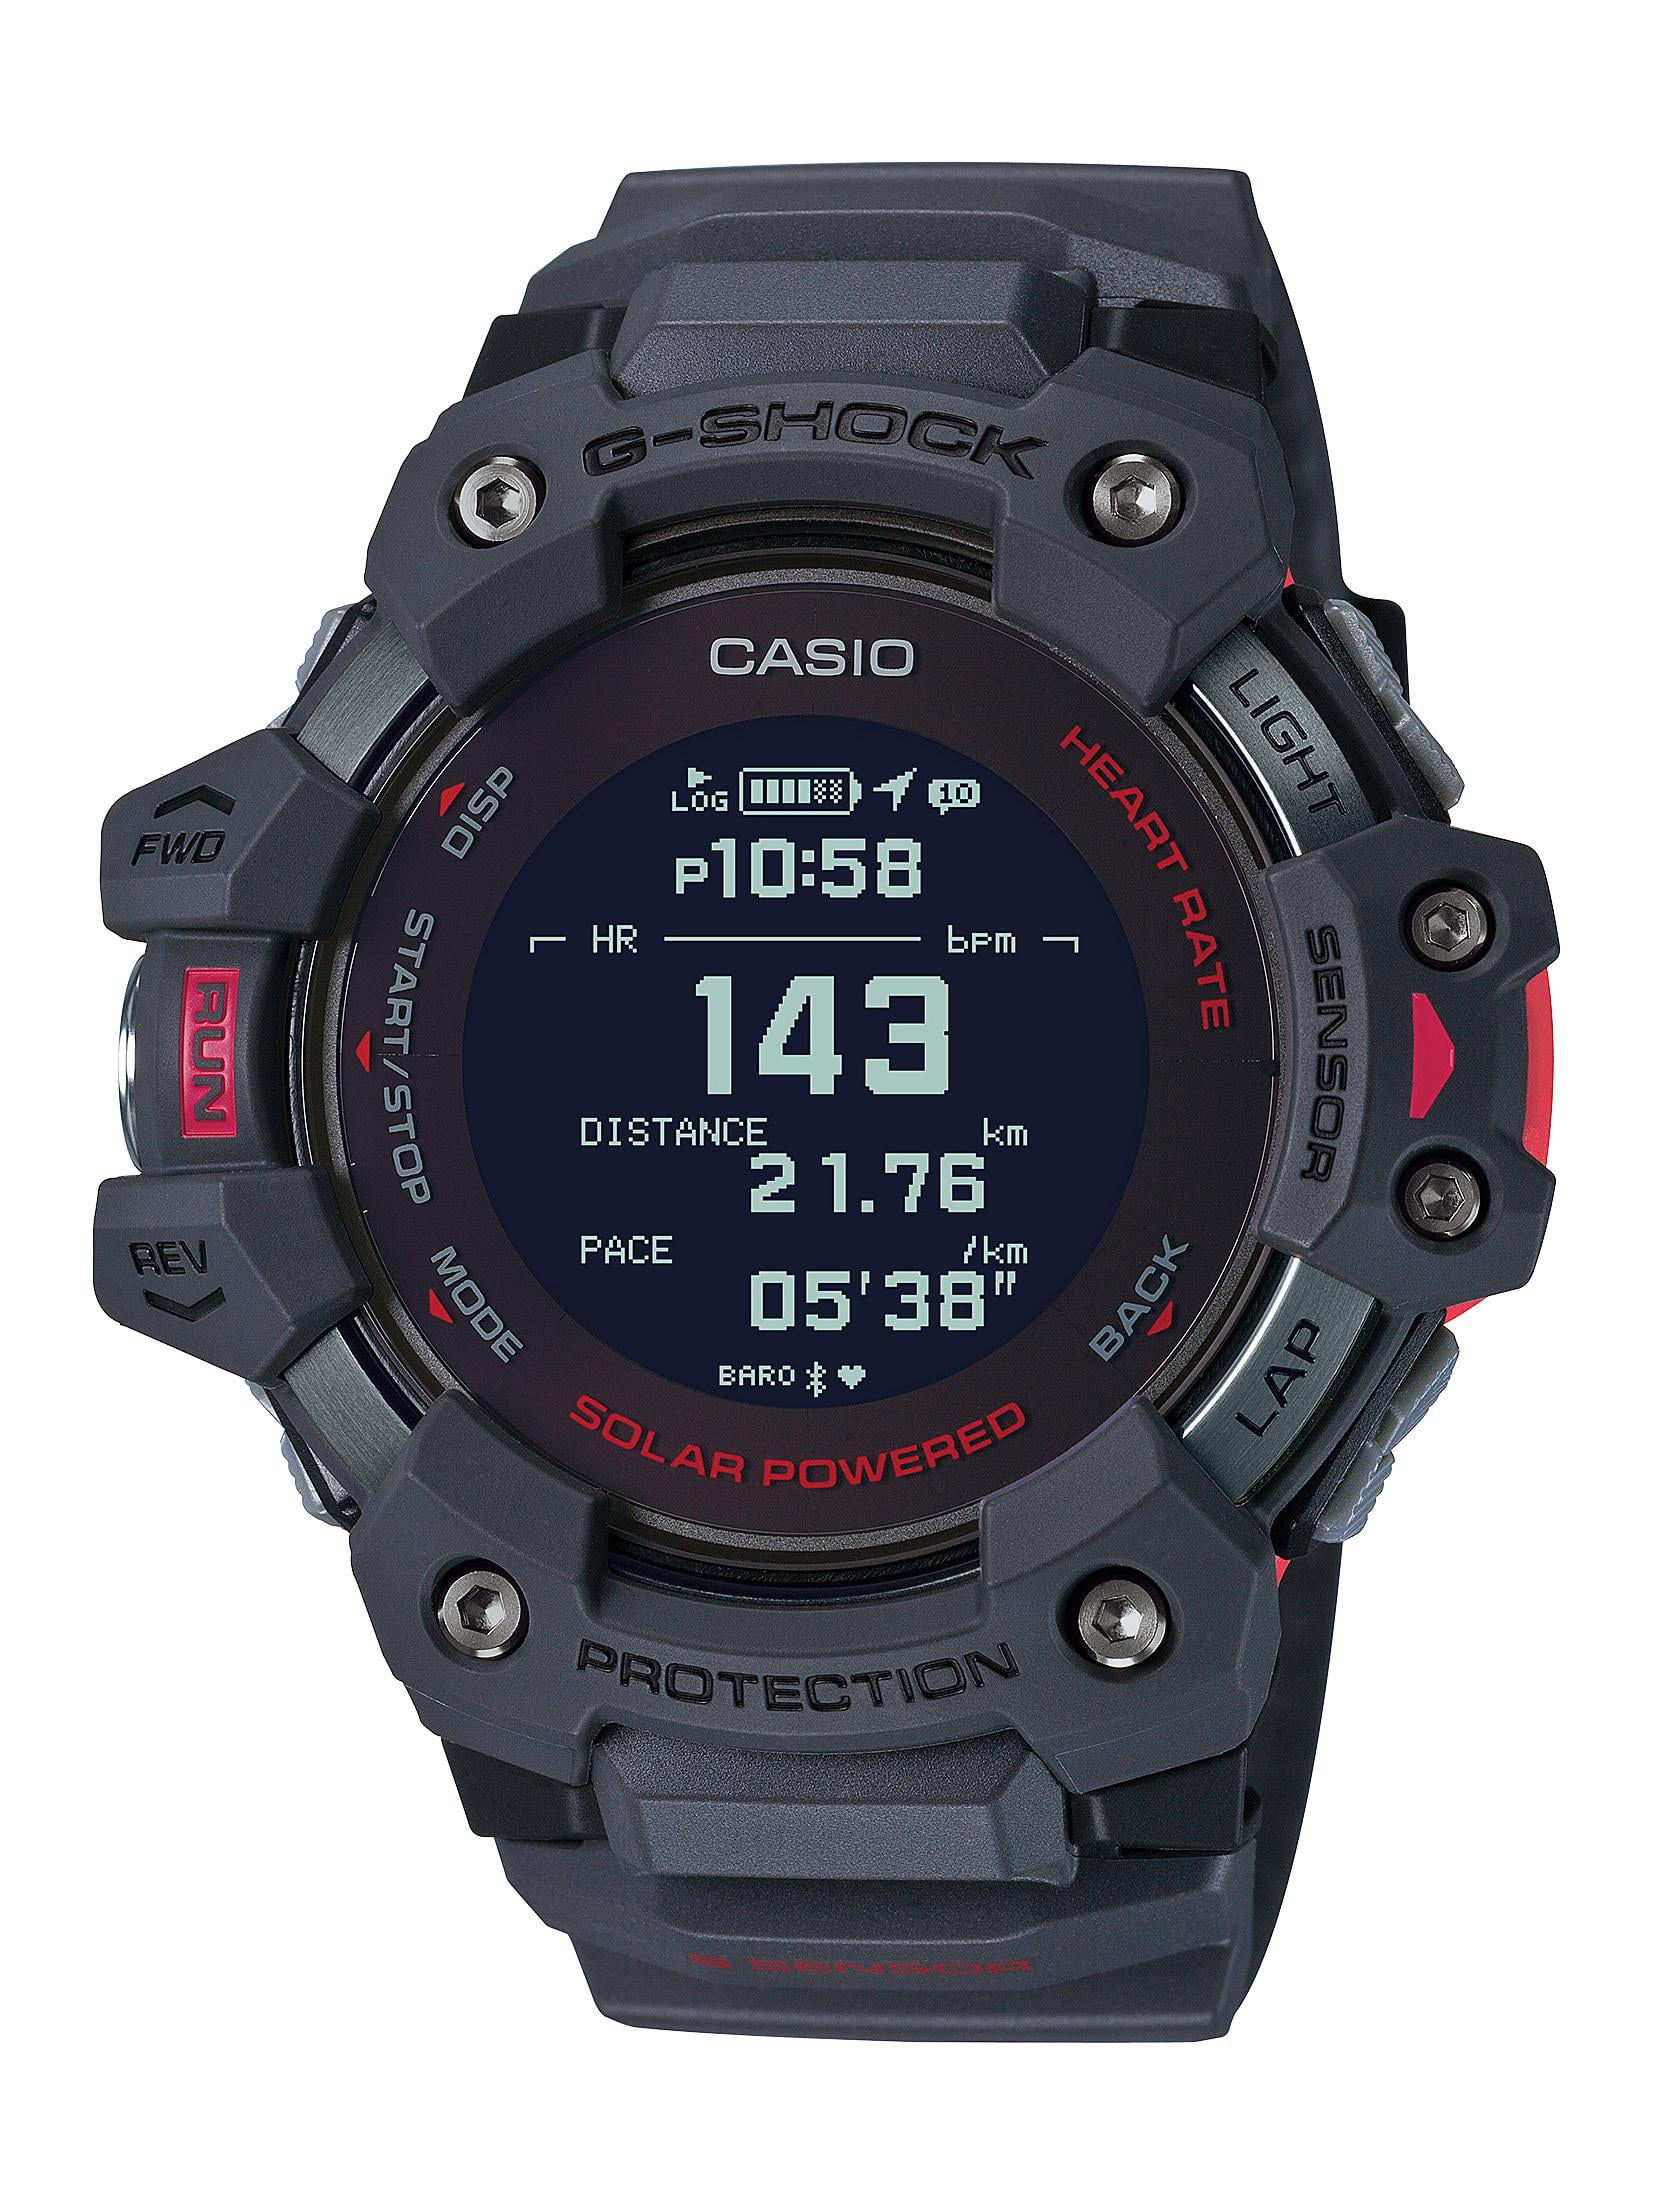 Casio G Shock Move Gps Heart Rate Running Watch Quartz Solar With Resin Strap Gray Model Gbd H1000 8cr Walmart Com